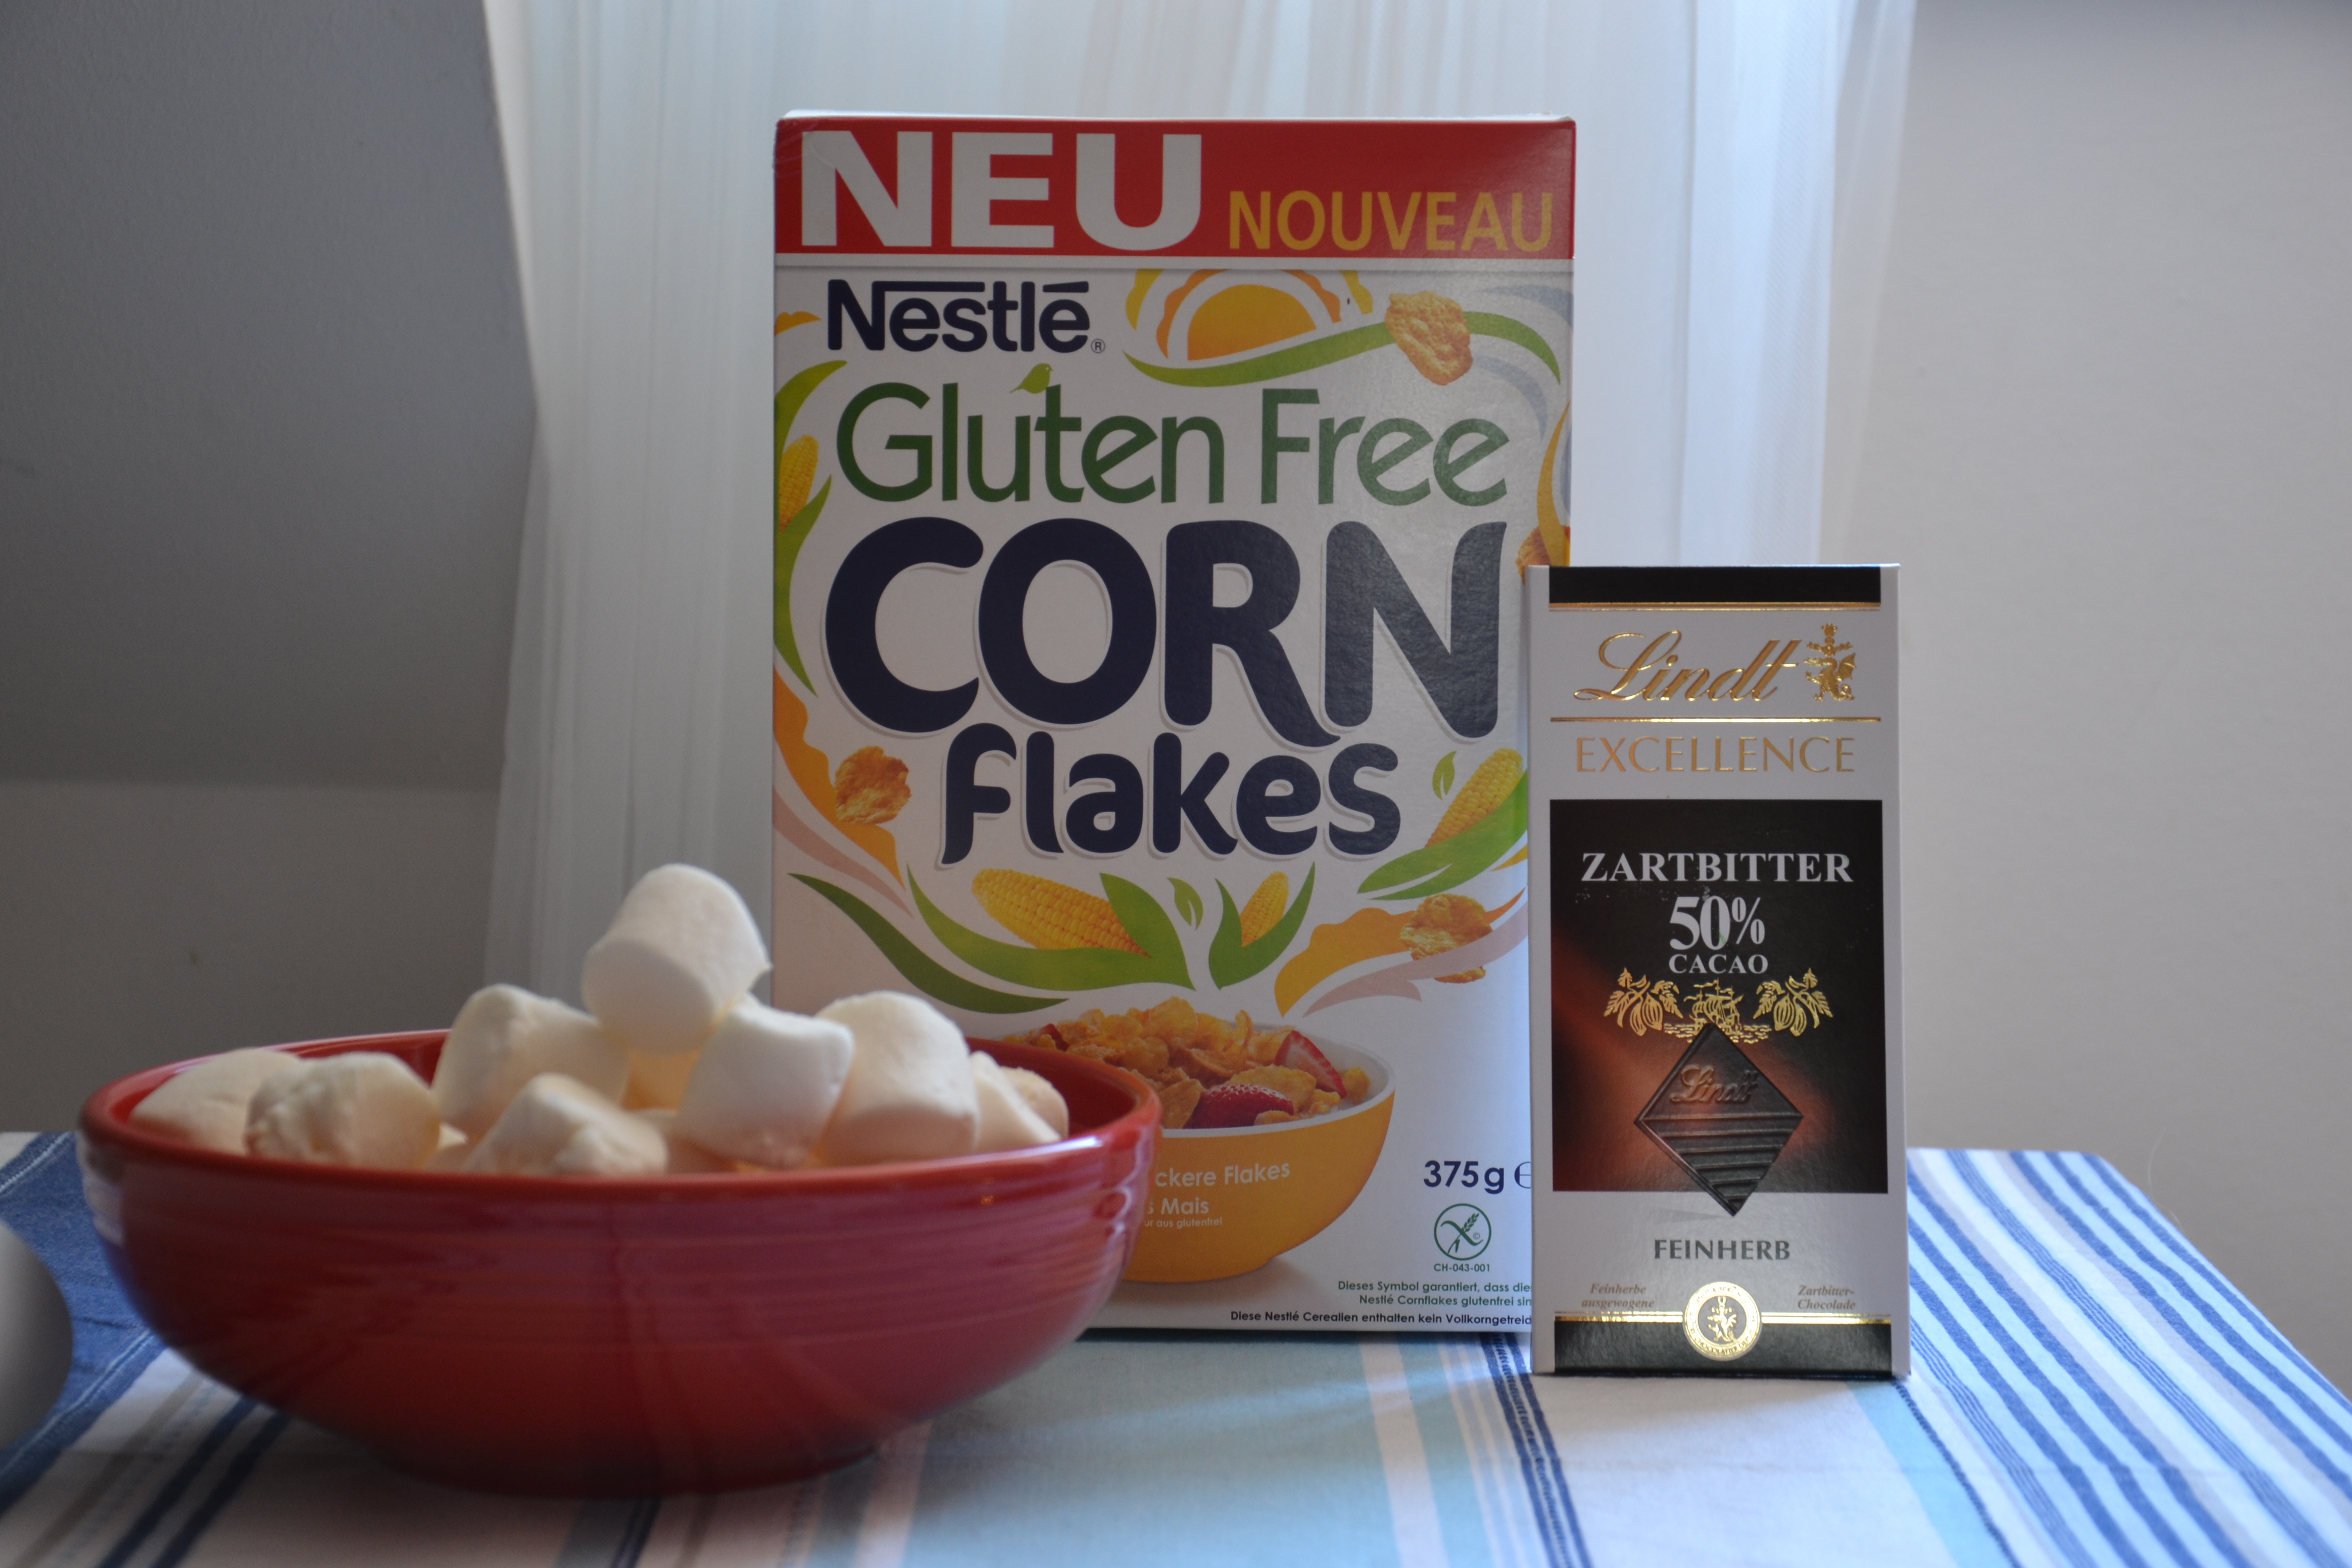 Cereales sin gluten choco corn flakes nestle 375g